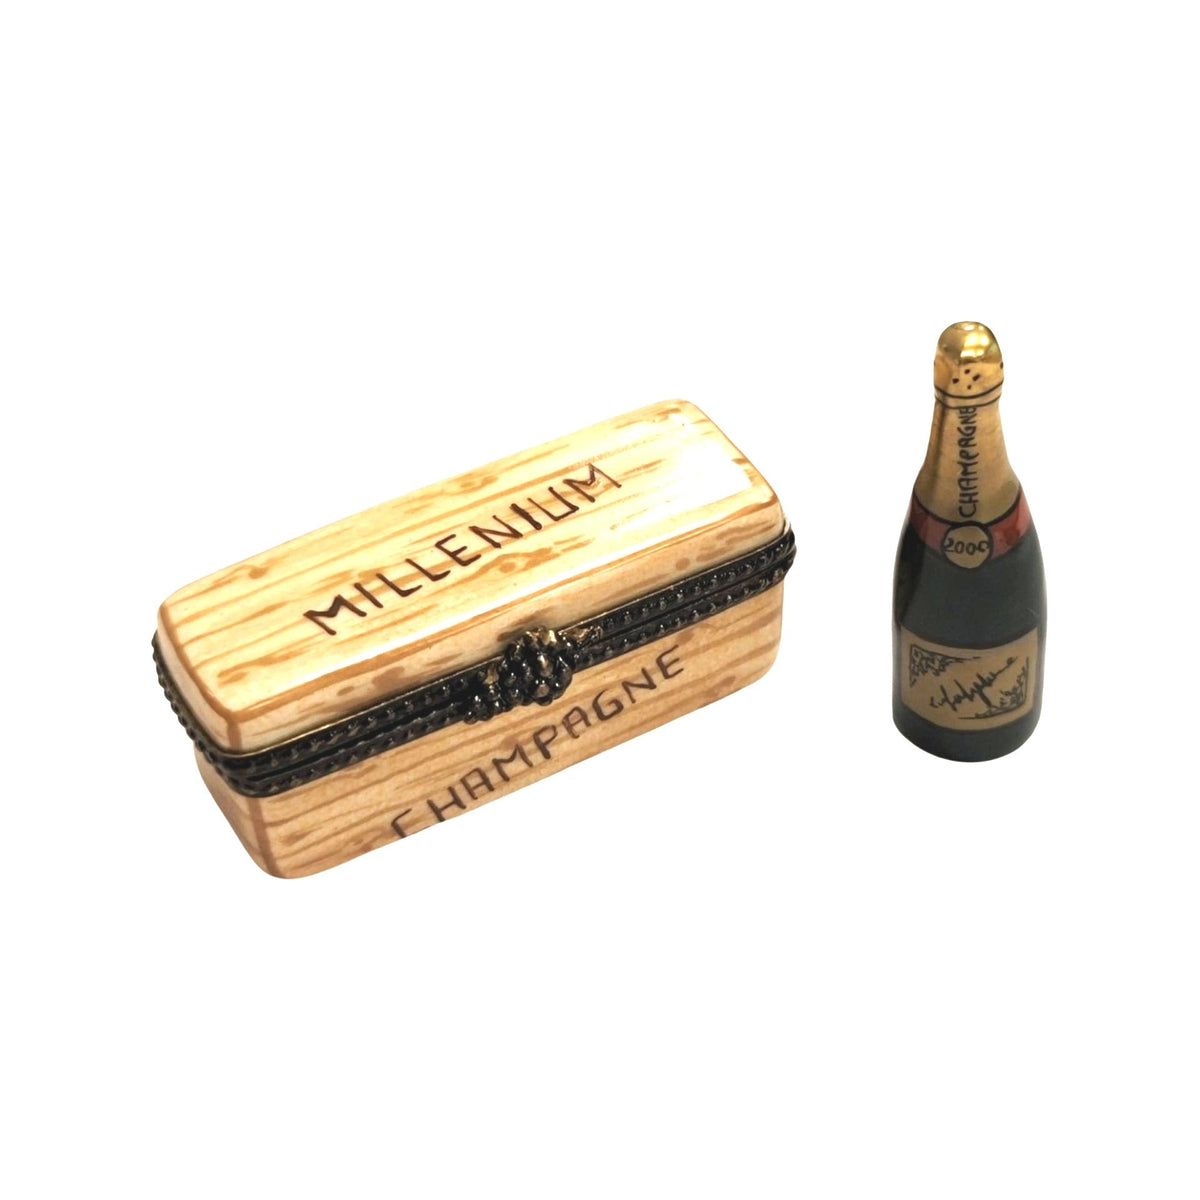 Millineum Bottle of Champagne in-wine-CH6D251